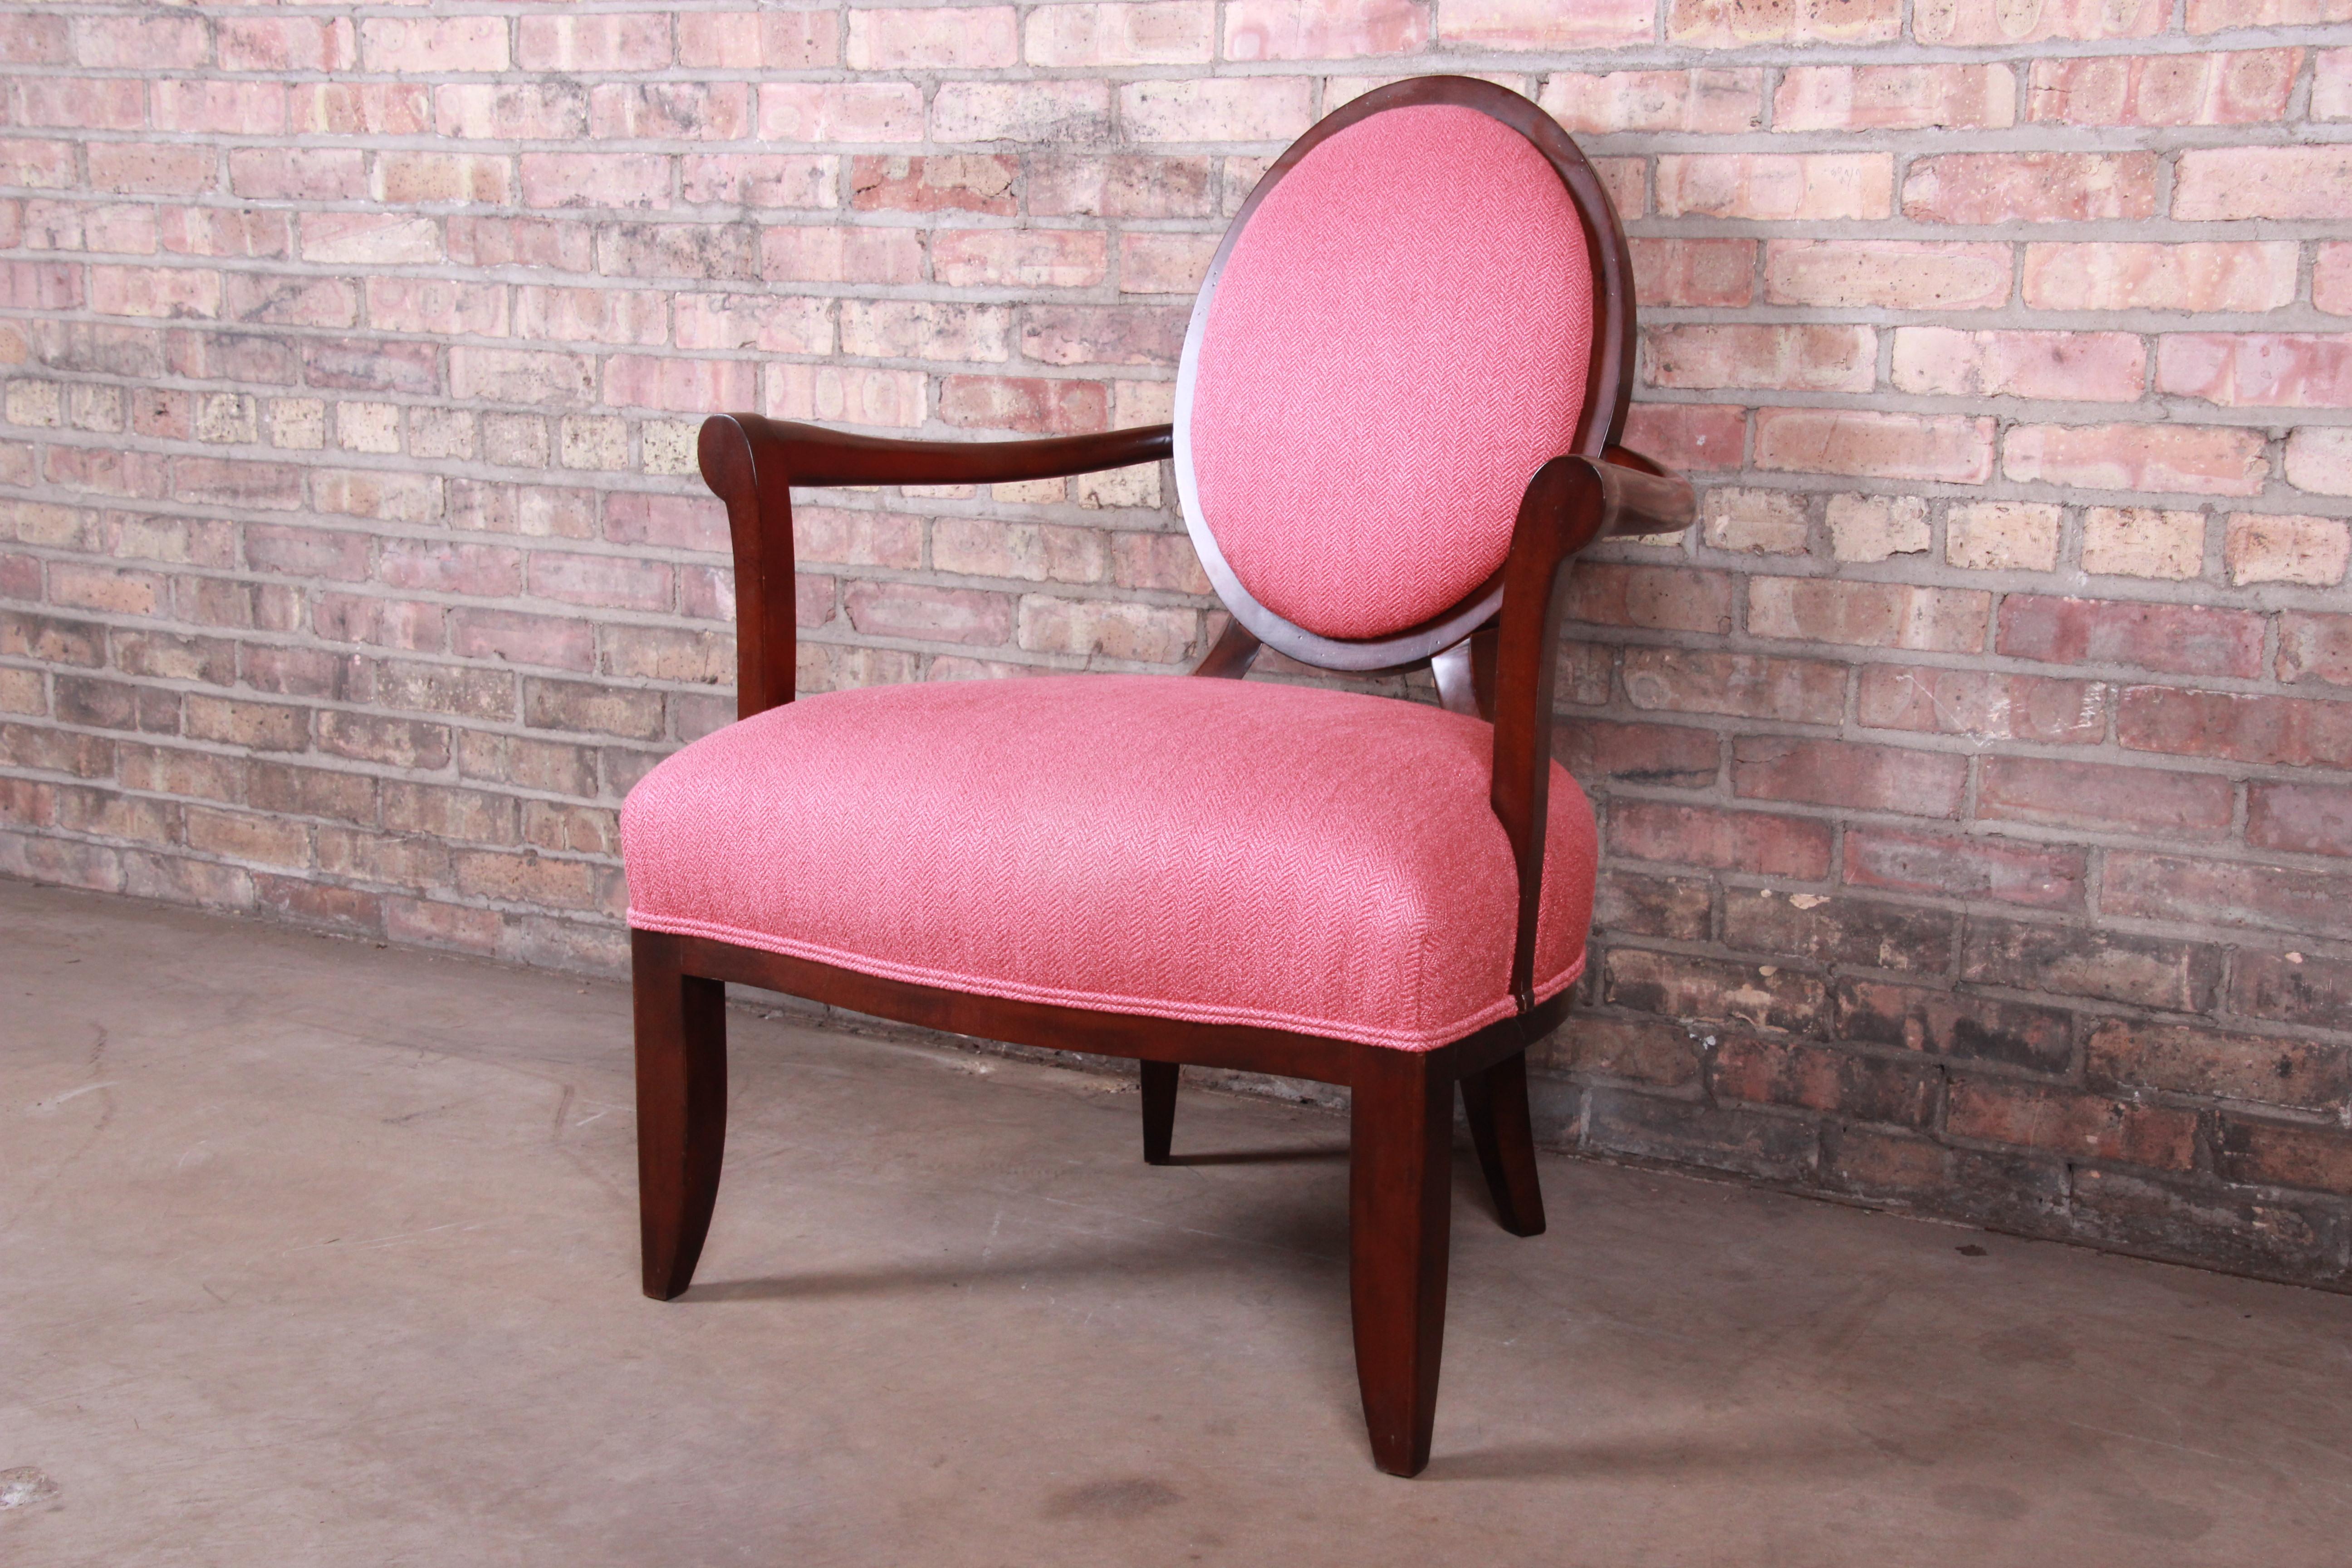 Moderne Barbara Barry pour Baker Furniture, fauteuil de salon contemporain en vente